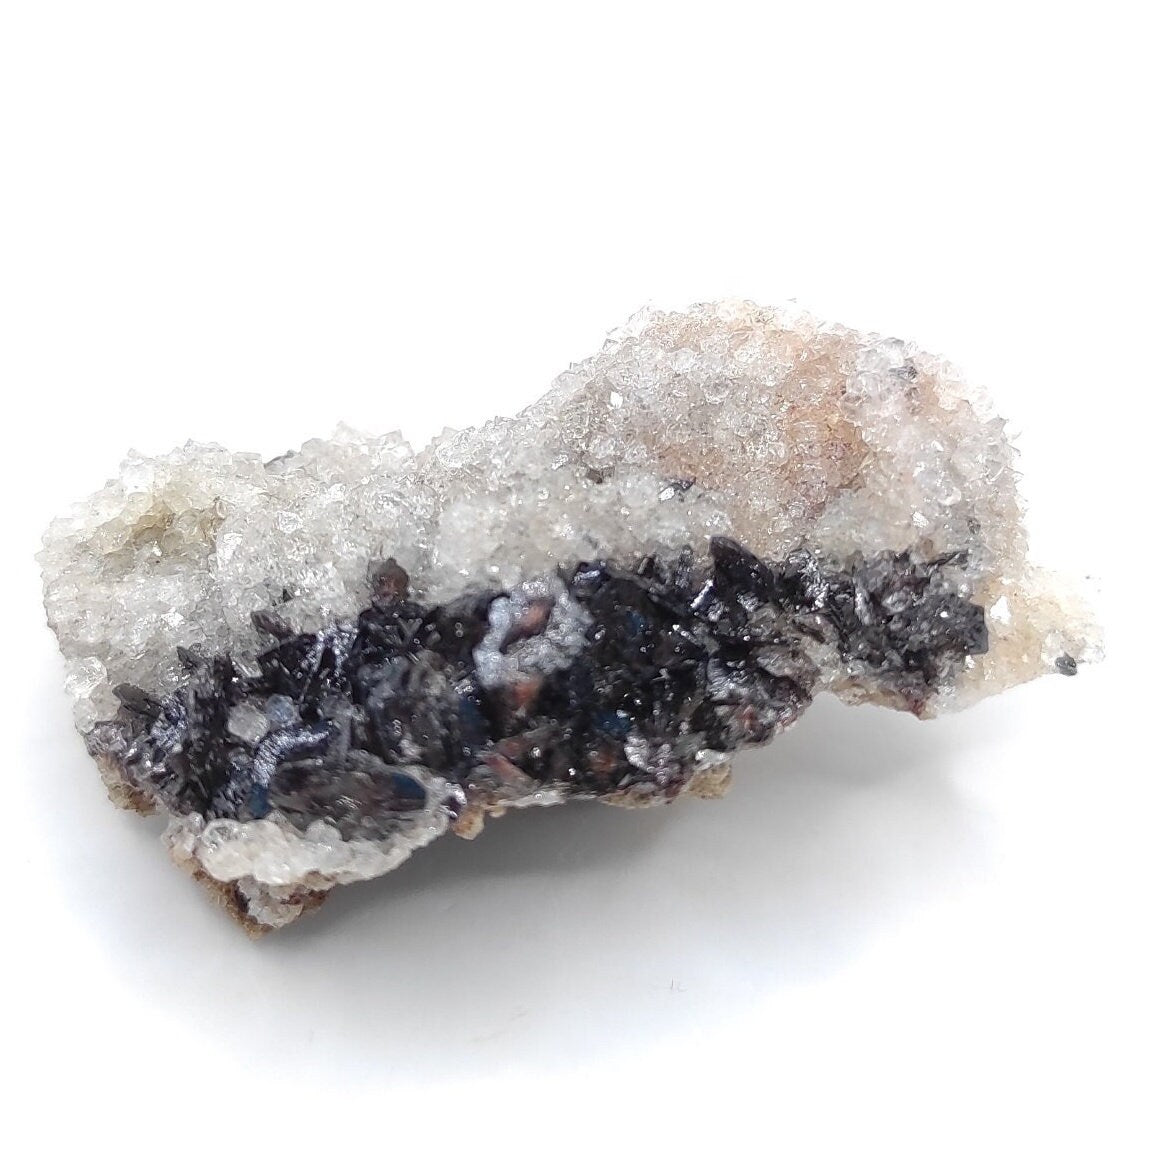 10g Descloizite Specimen - Rare Mineral Specimens - Natural Crystal Specimen from Congo - M'fouati District, Bouenza, Republic of Congo